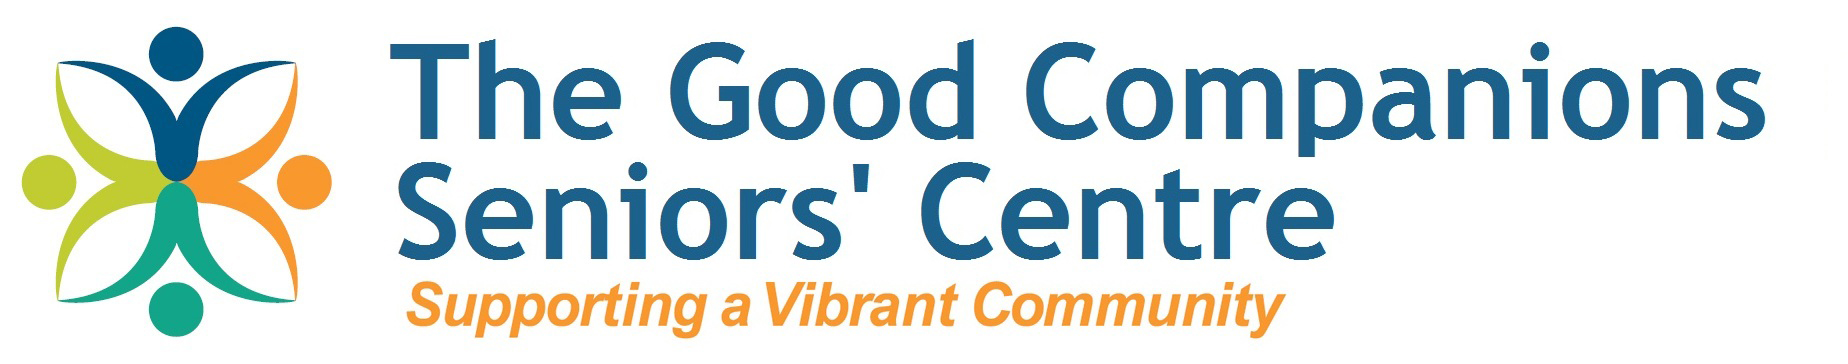 The Good Companion Senior Centre logo